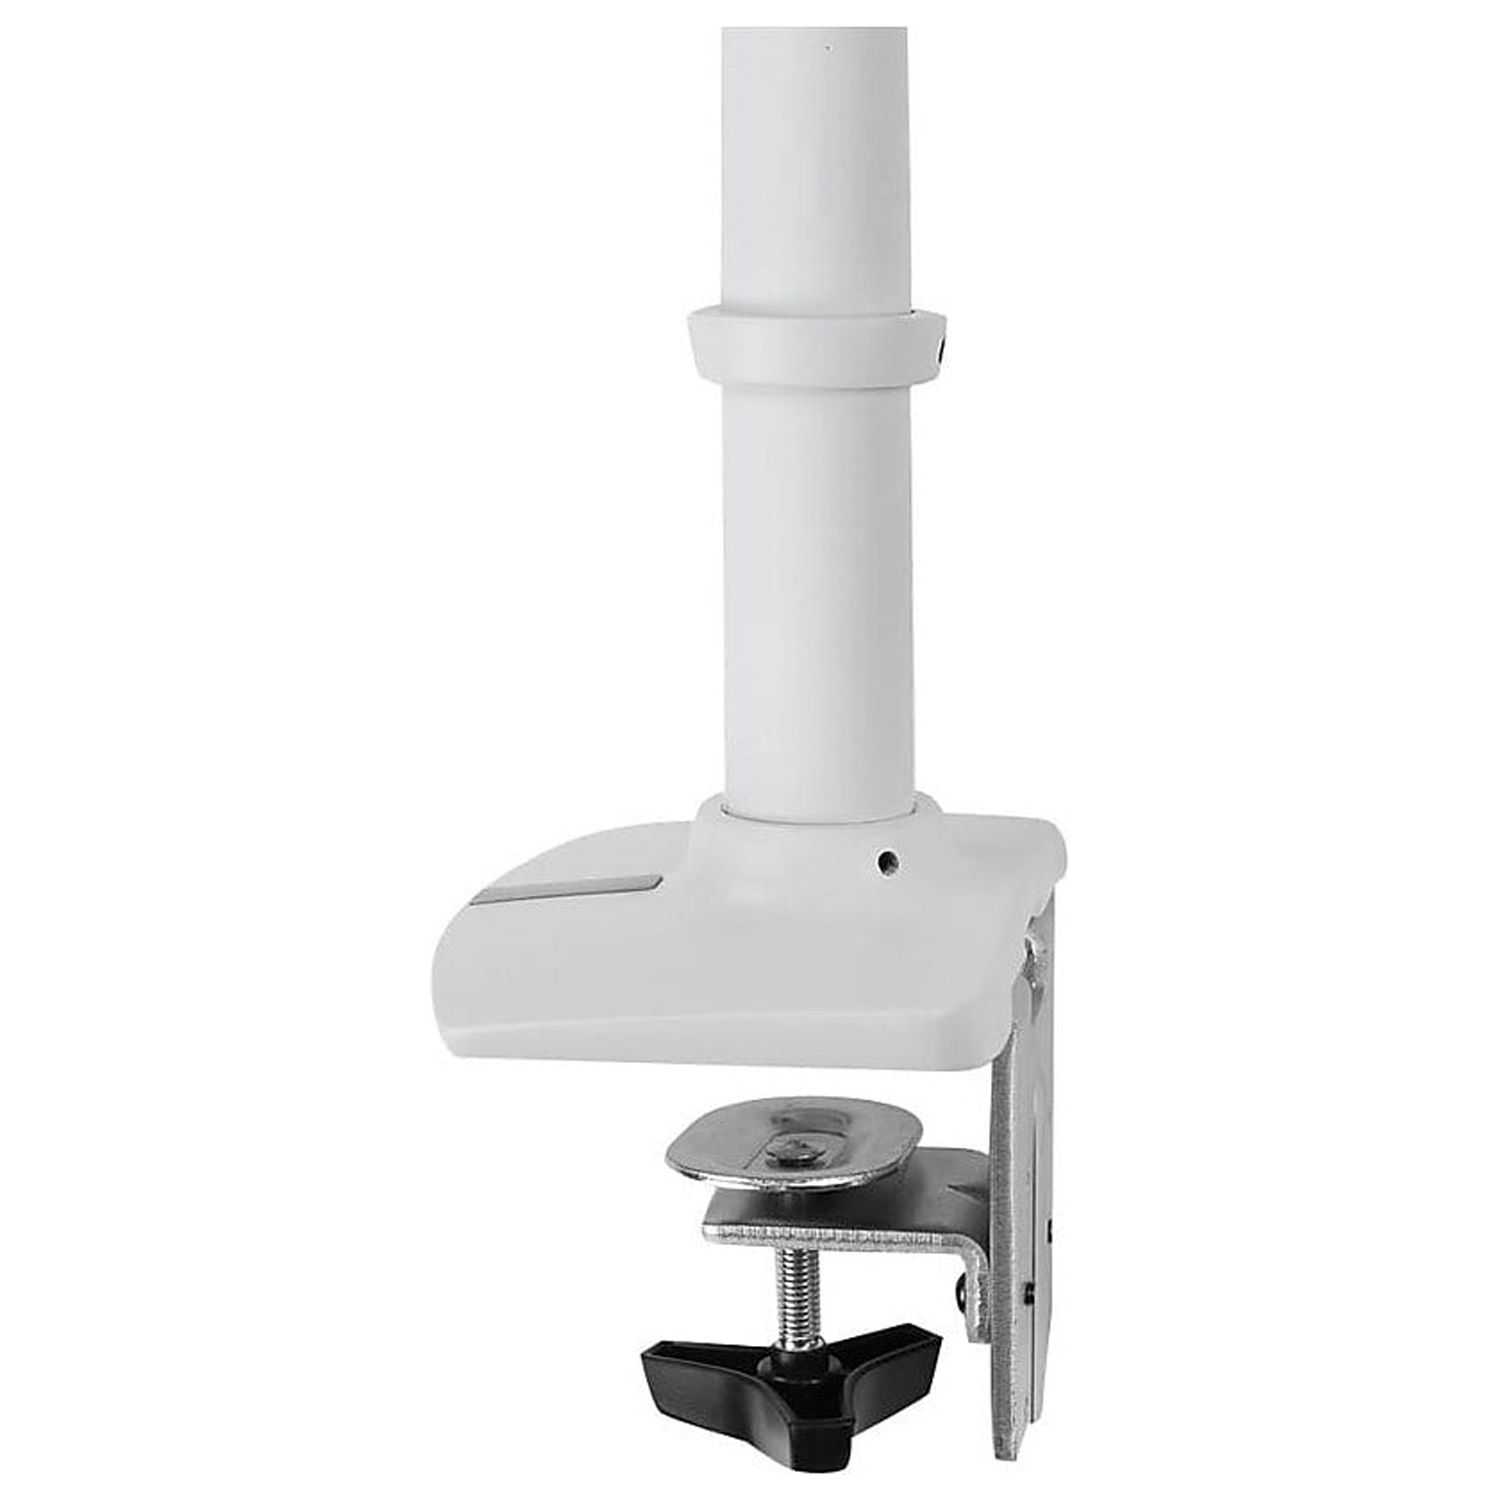 Ergotron Mounting Arm for Monitor, White - image 2 of 5